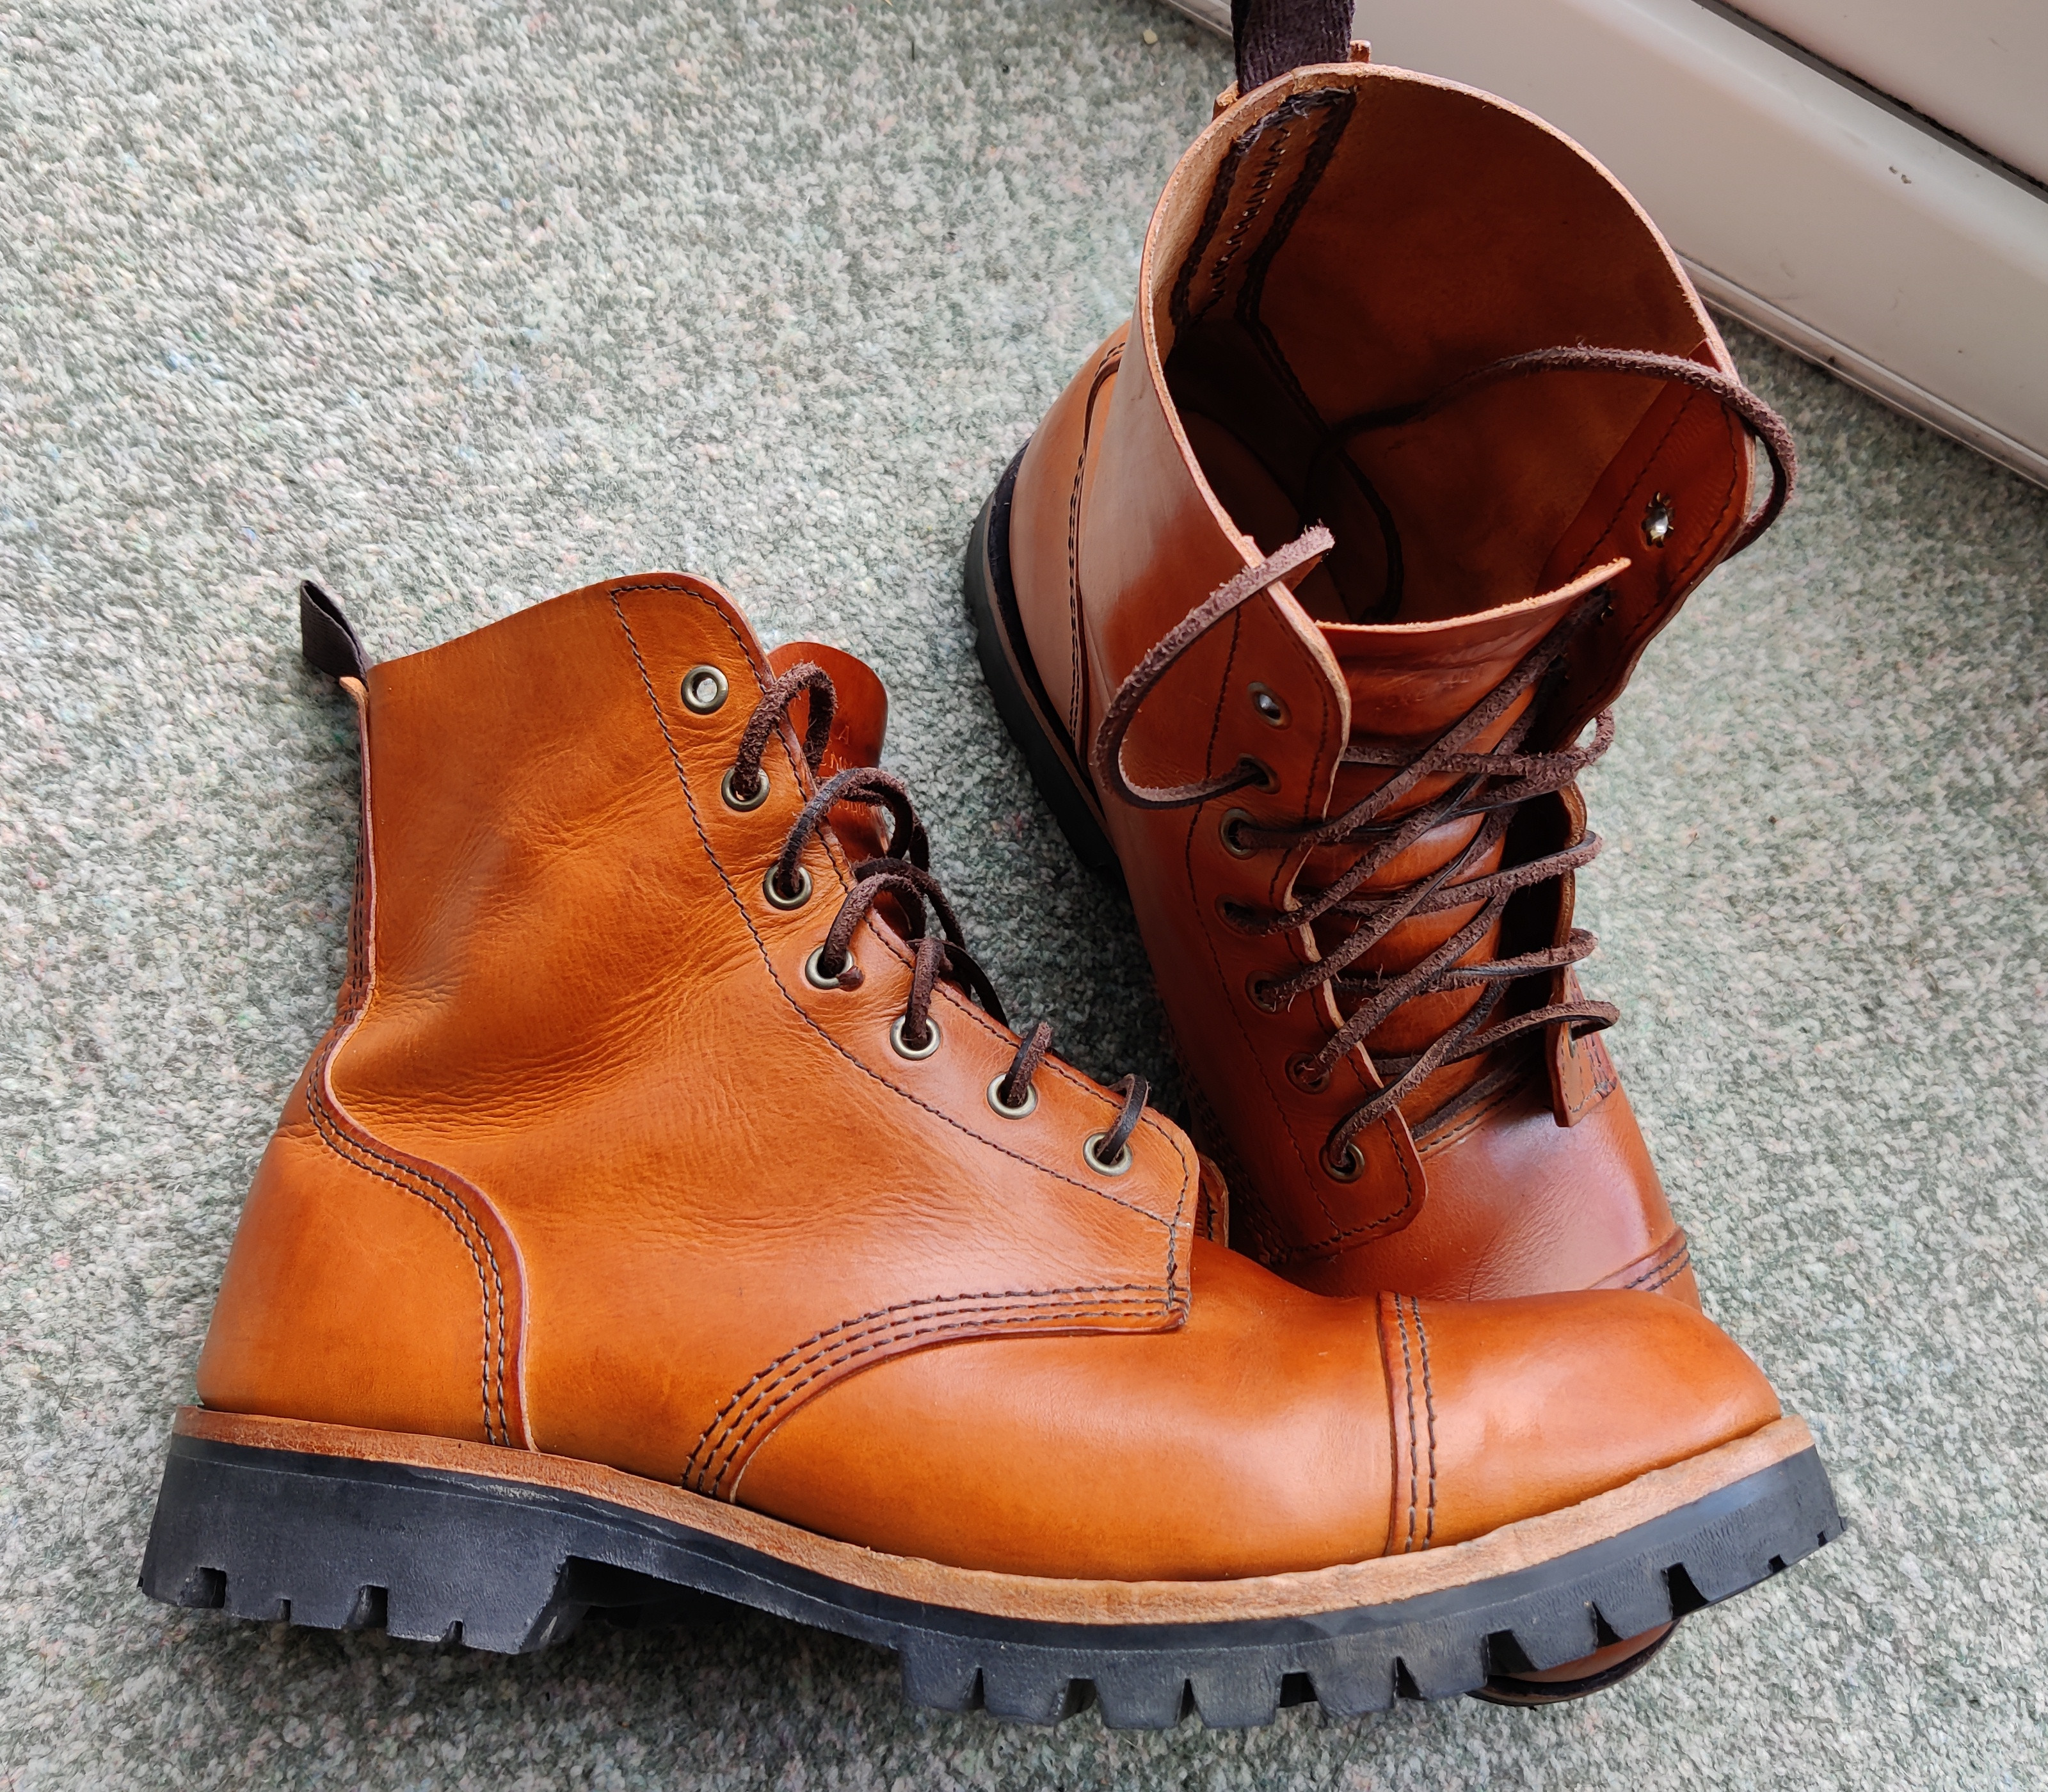 William Lennon 78TC boots